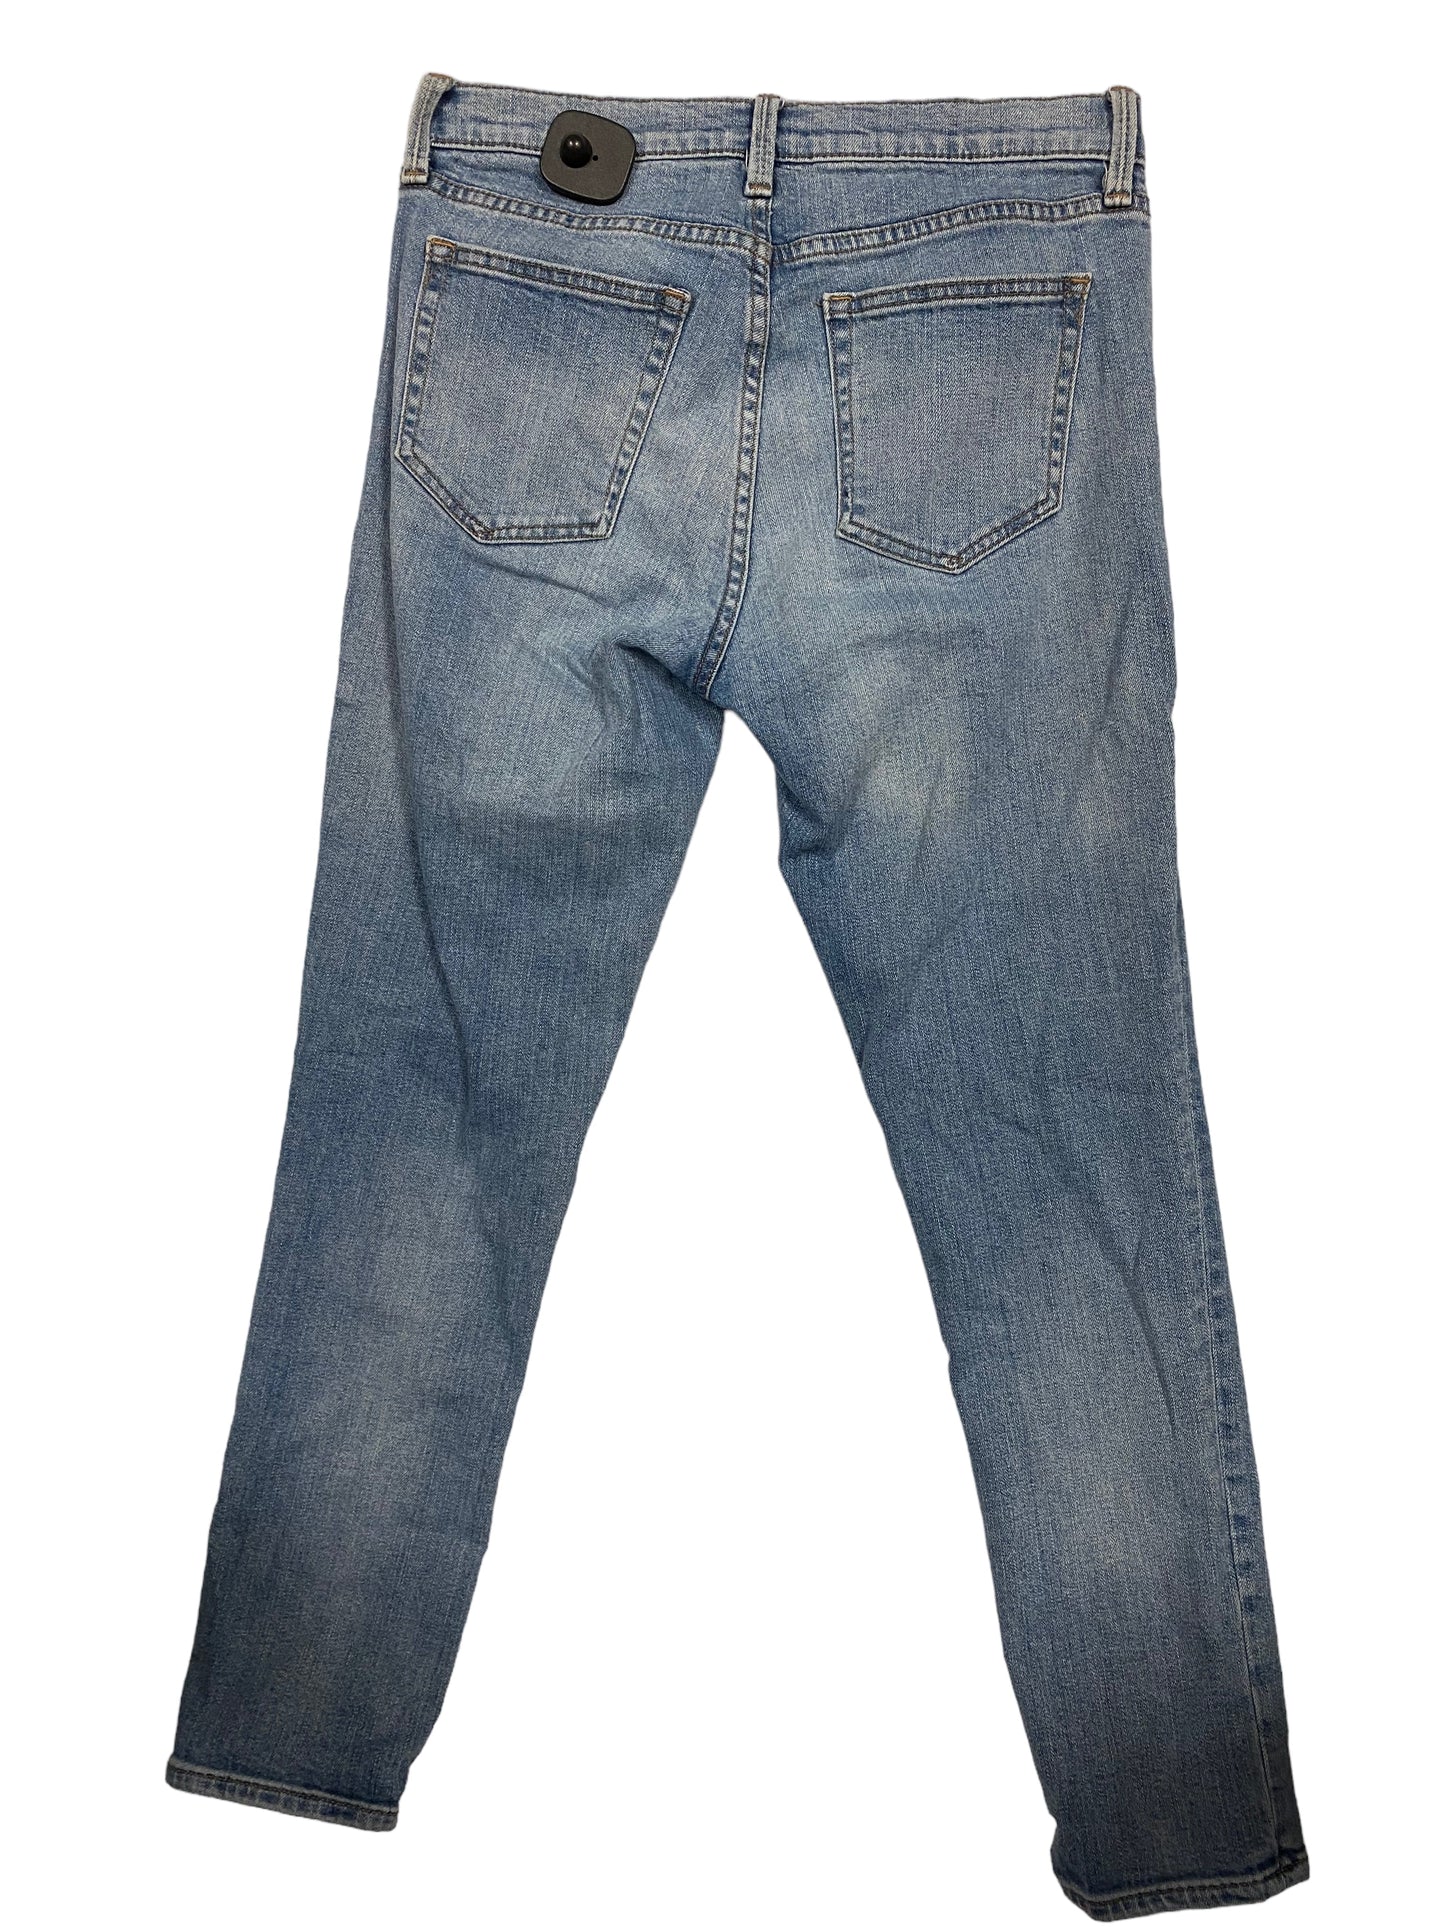 Denim Blue Jeans Skinny Gap, Size 4